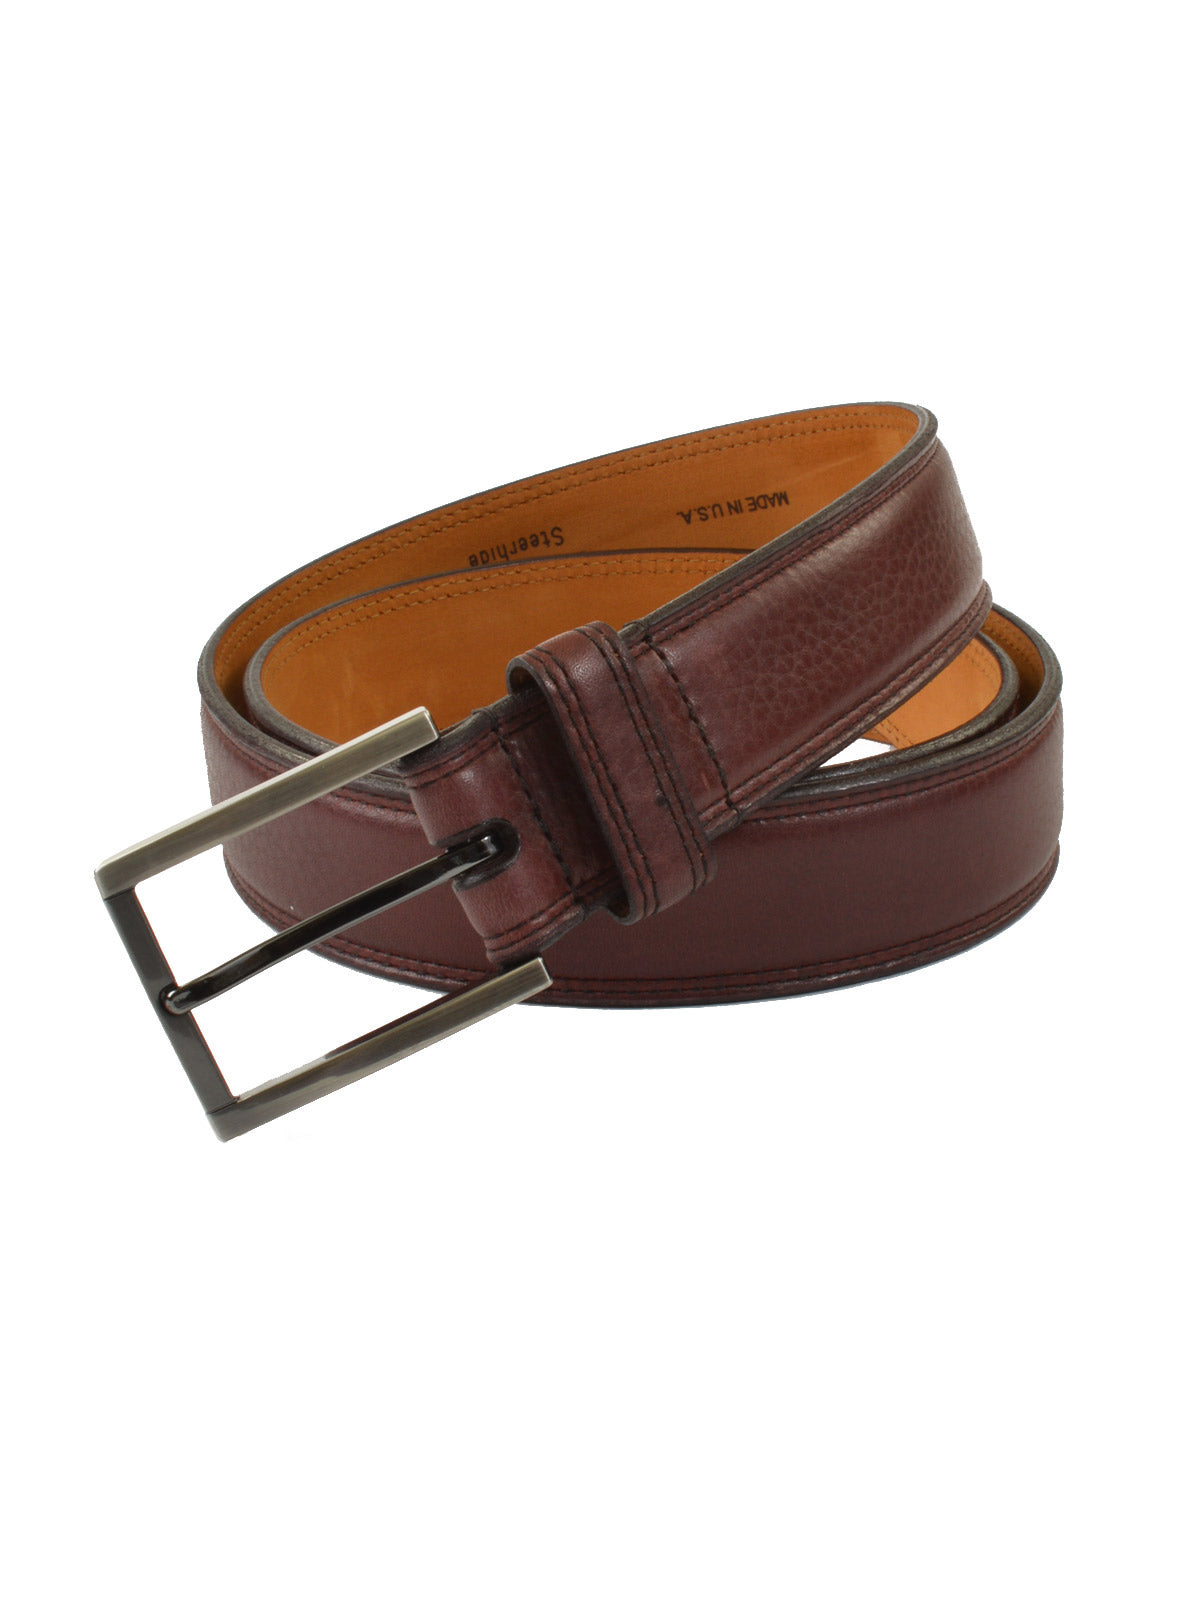 Lejon Glove Tanned Leather Dignitary Belts in Merlot - Regular Sizes